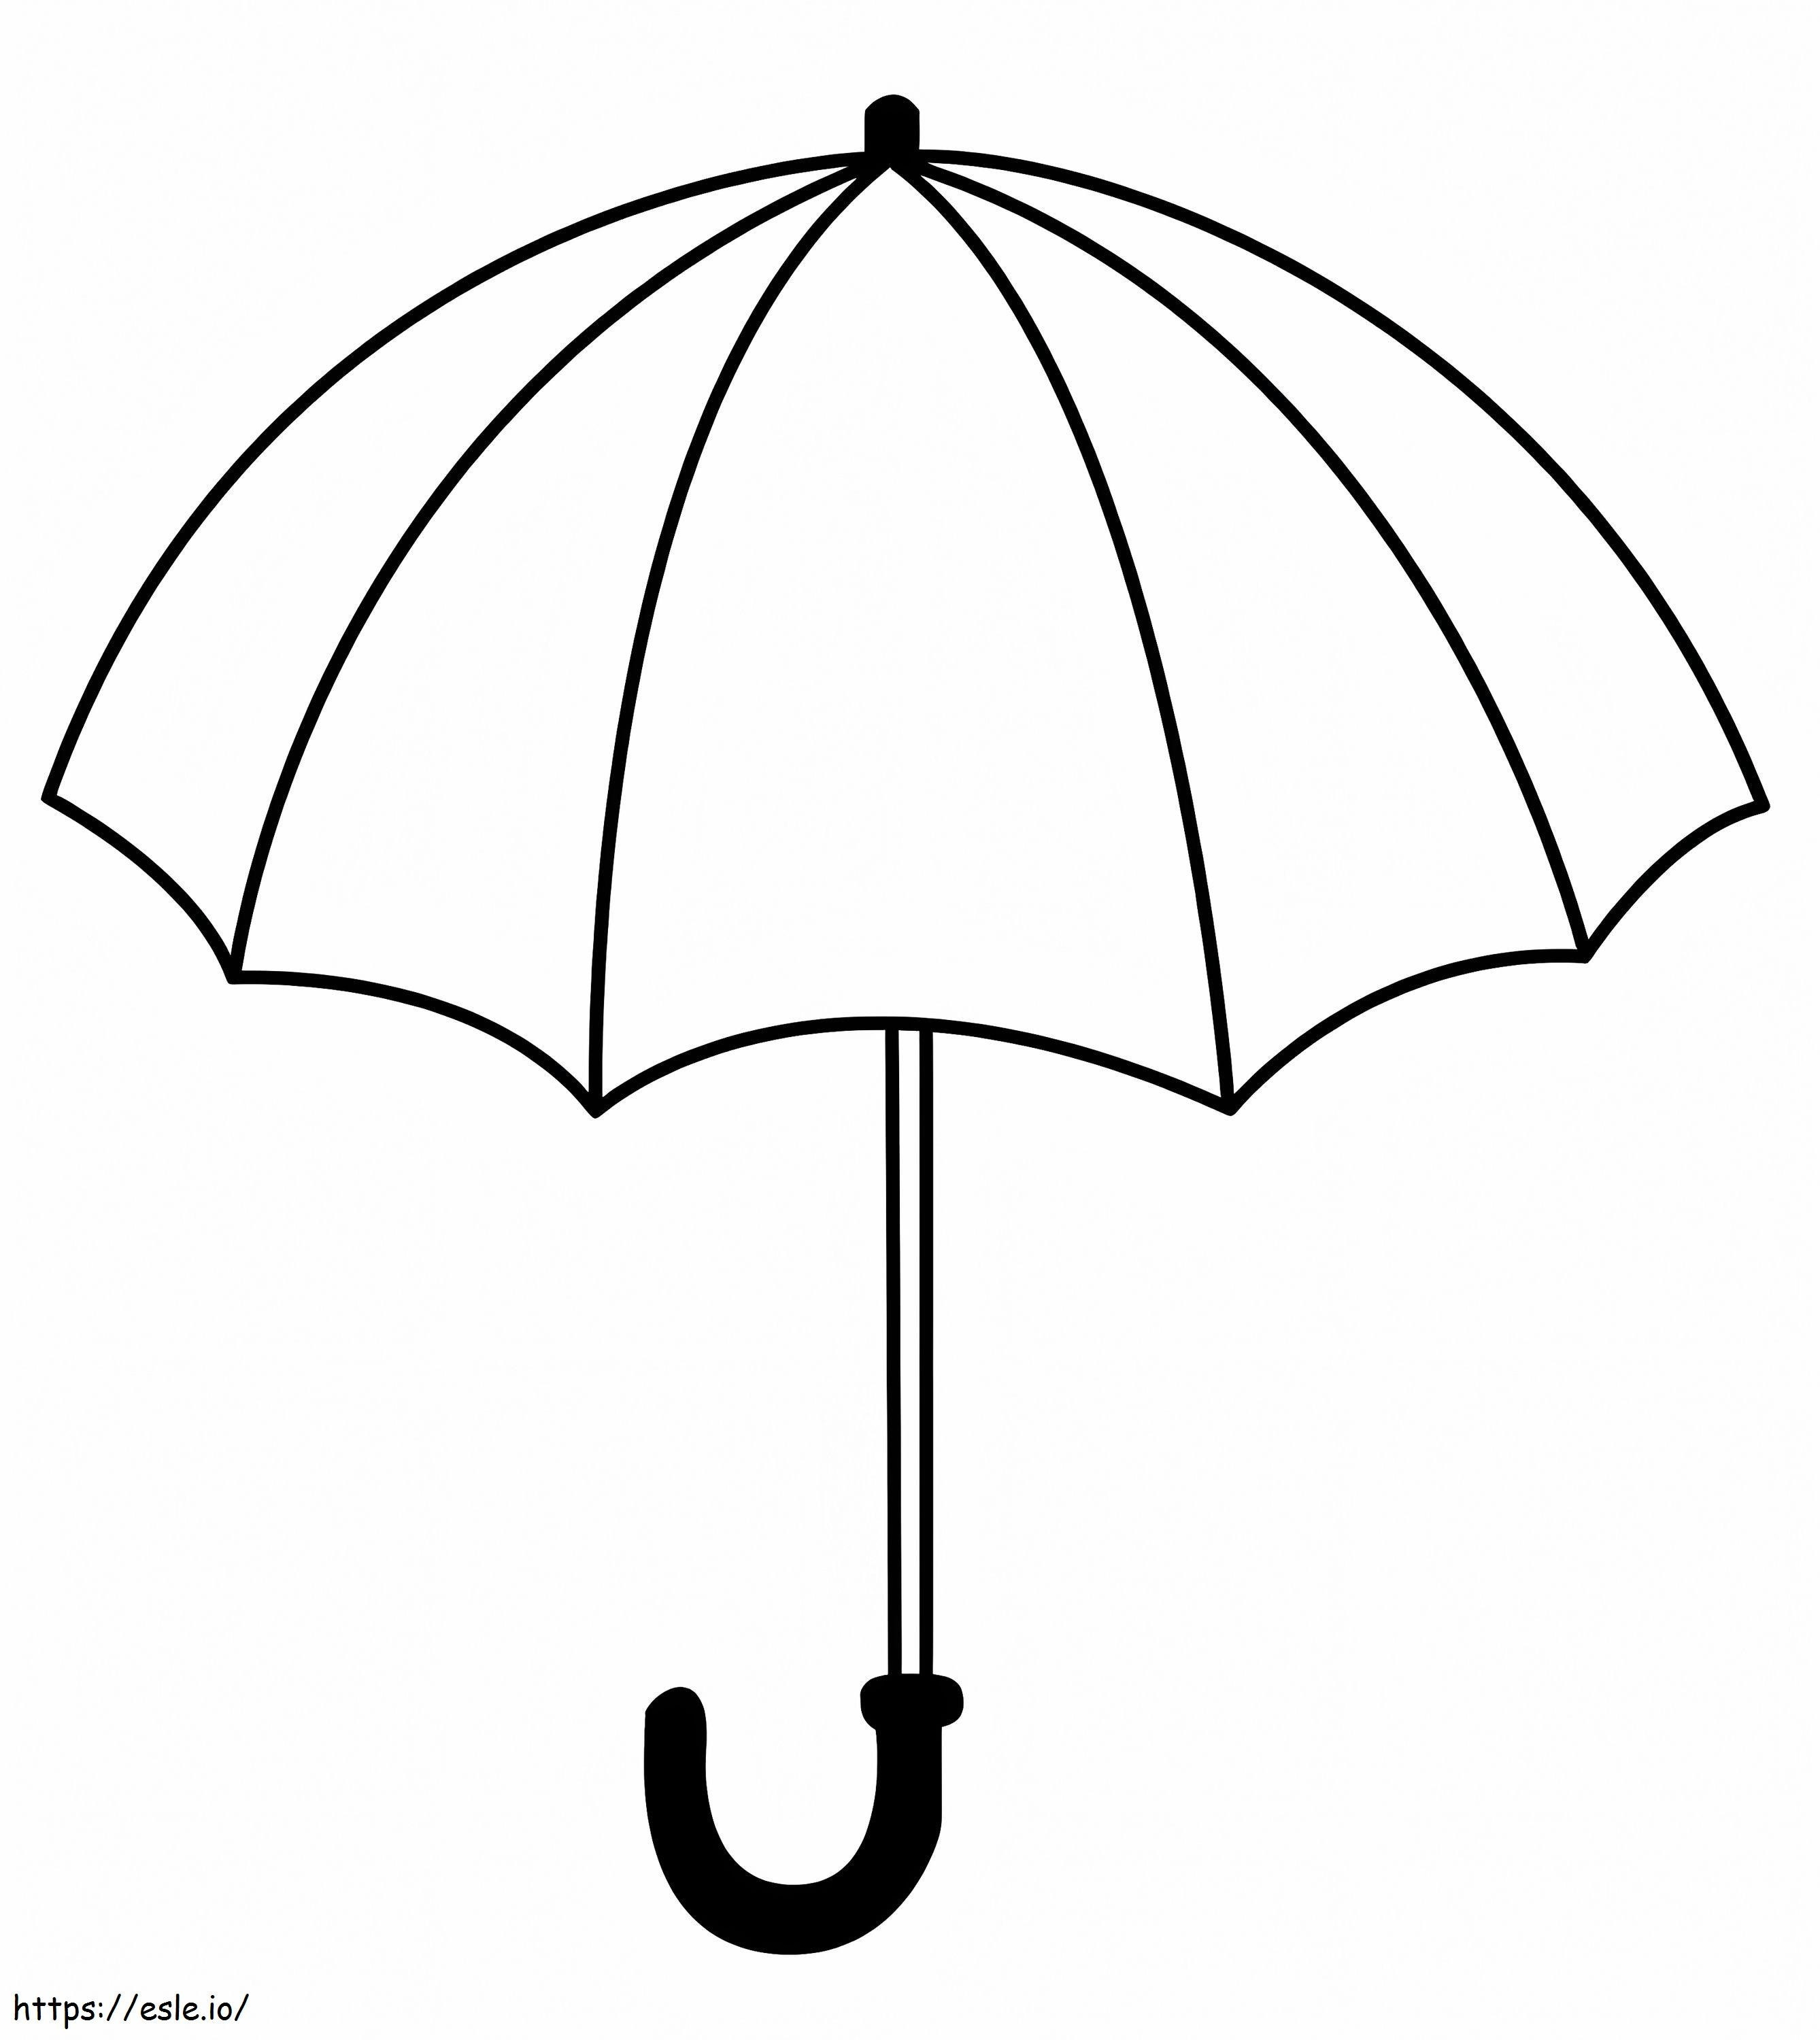 O umbrela de colorat